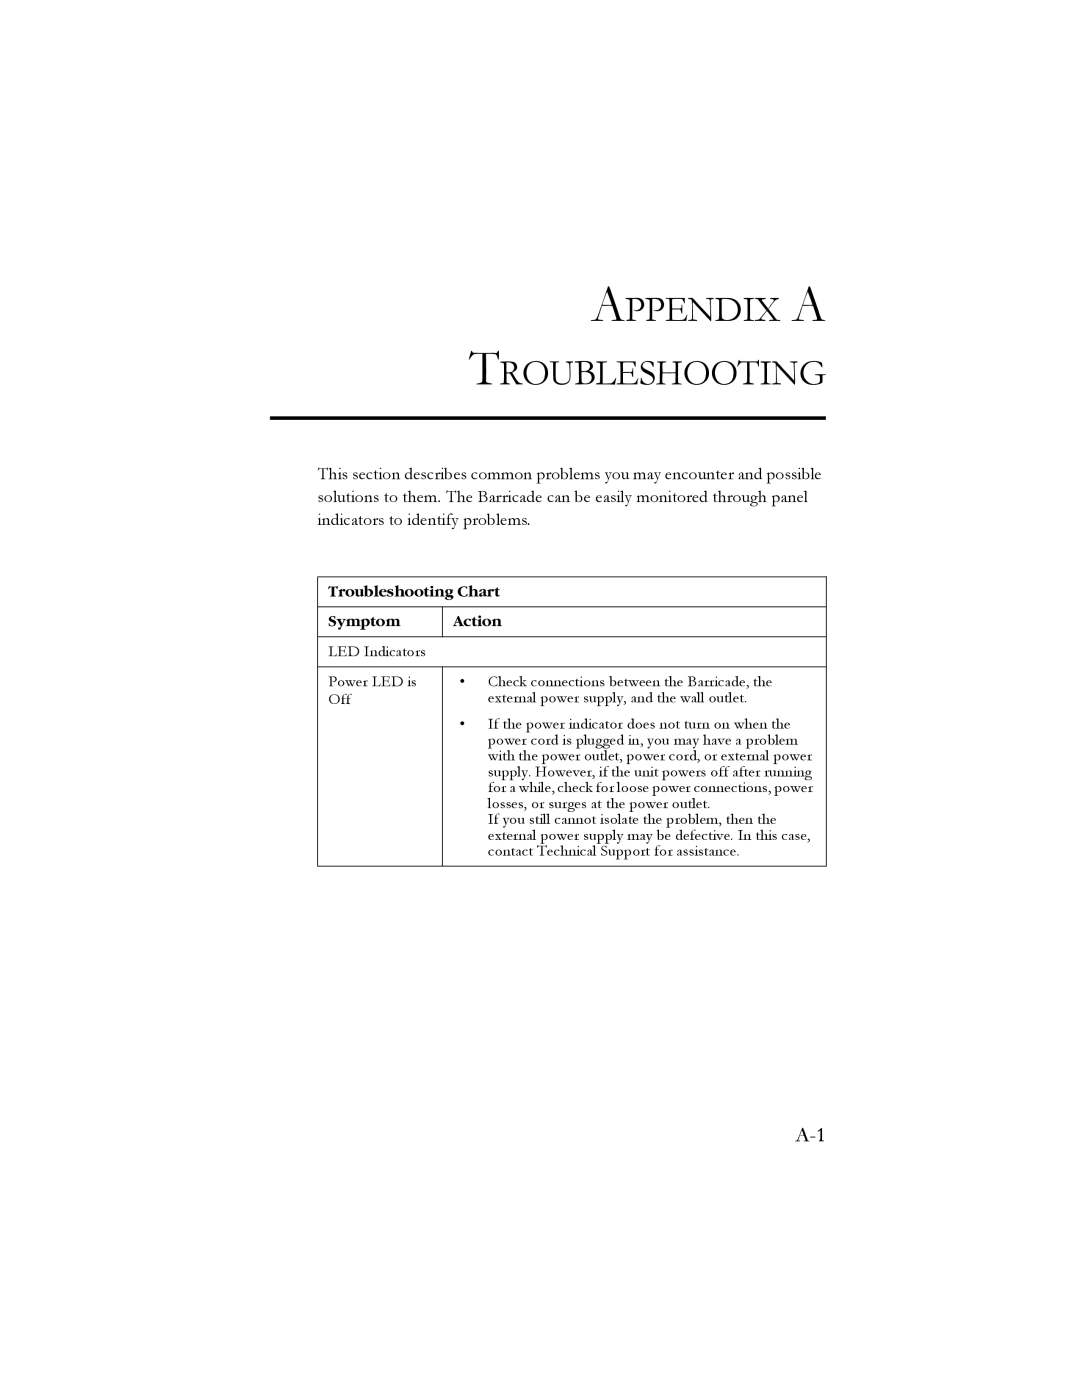 SMC Networks SMC7908VoWBRA manual Appendix A Troubleshooting, Troubleshooting Chart, Symptom, Action 